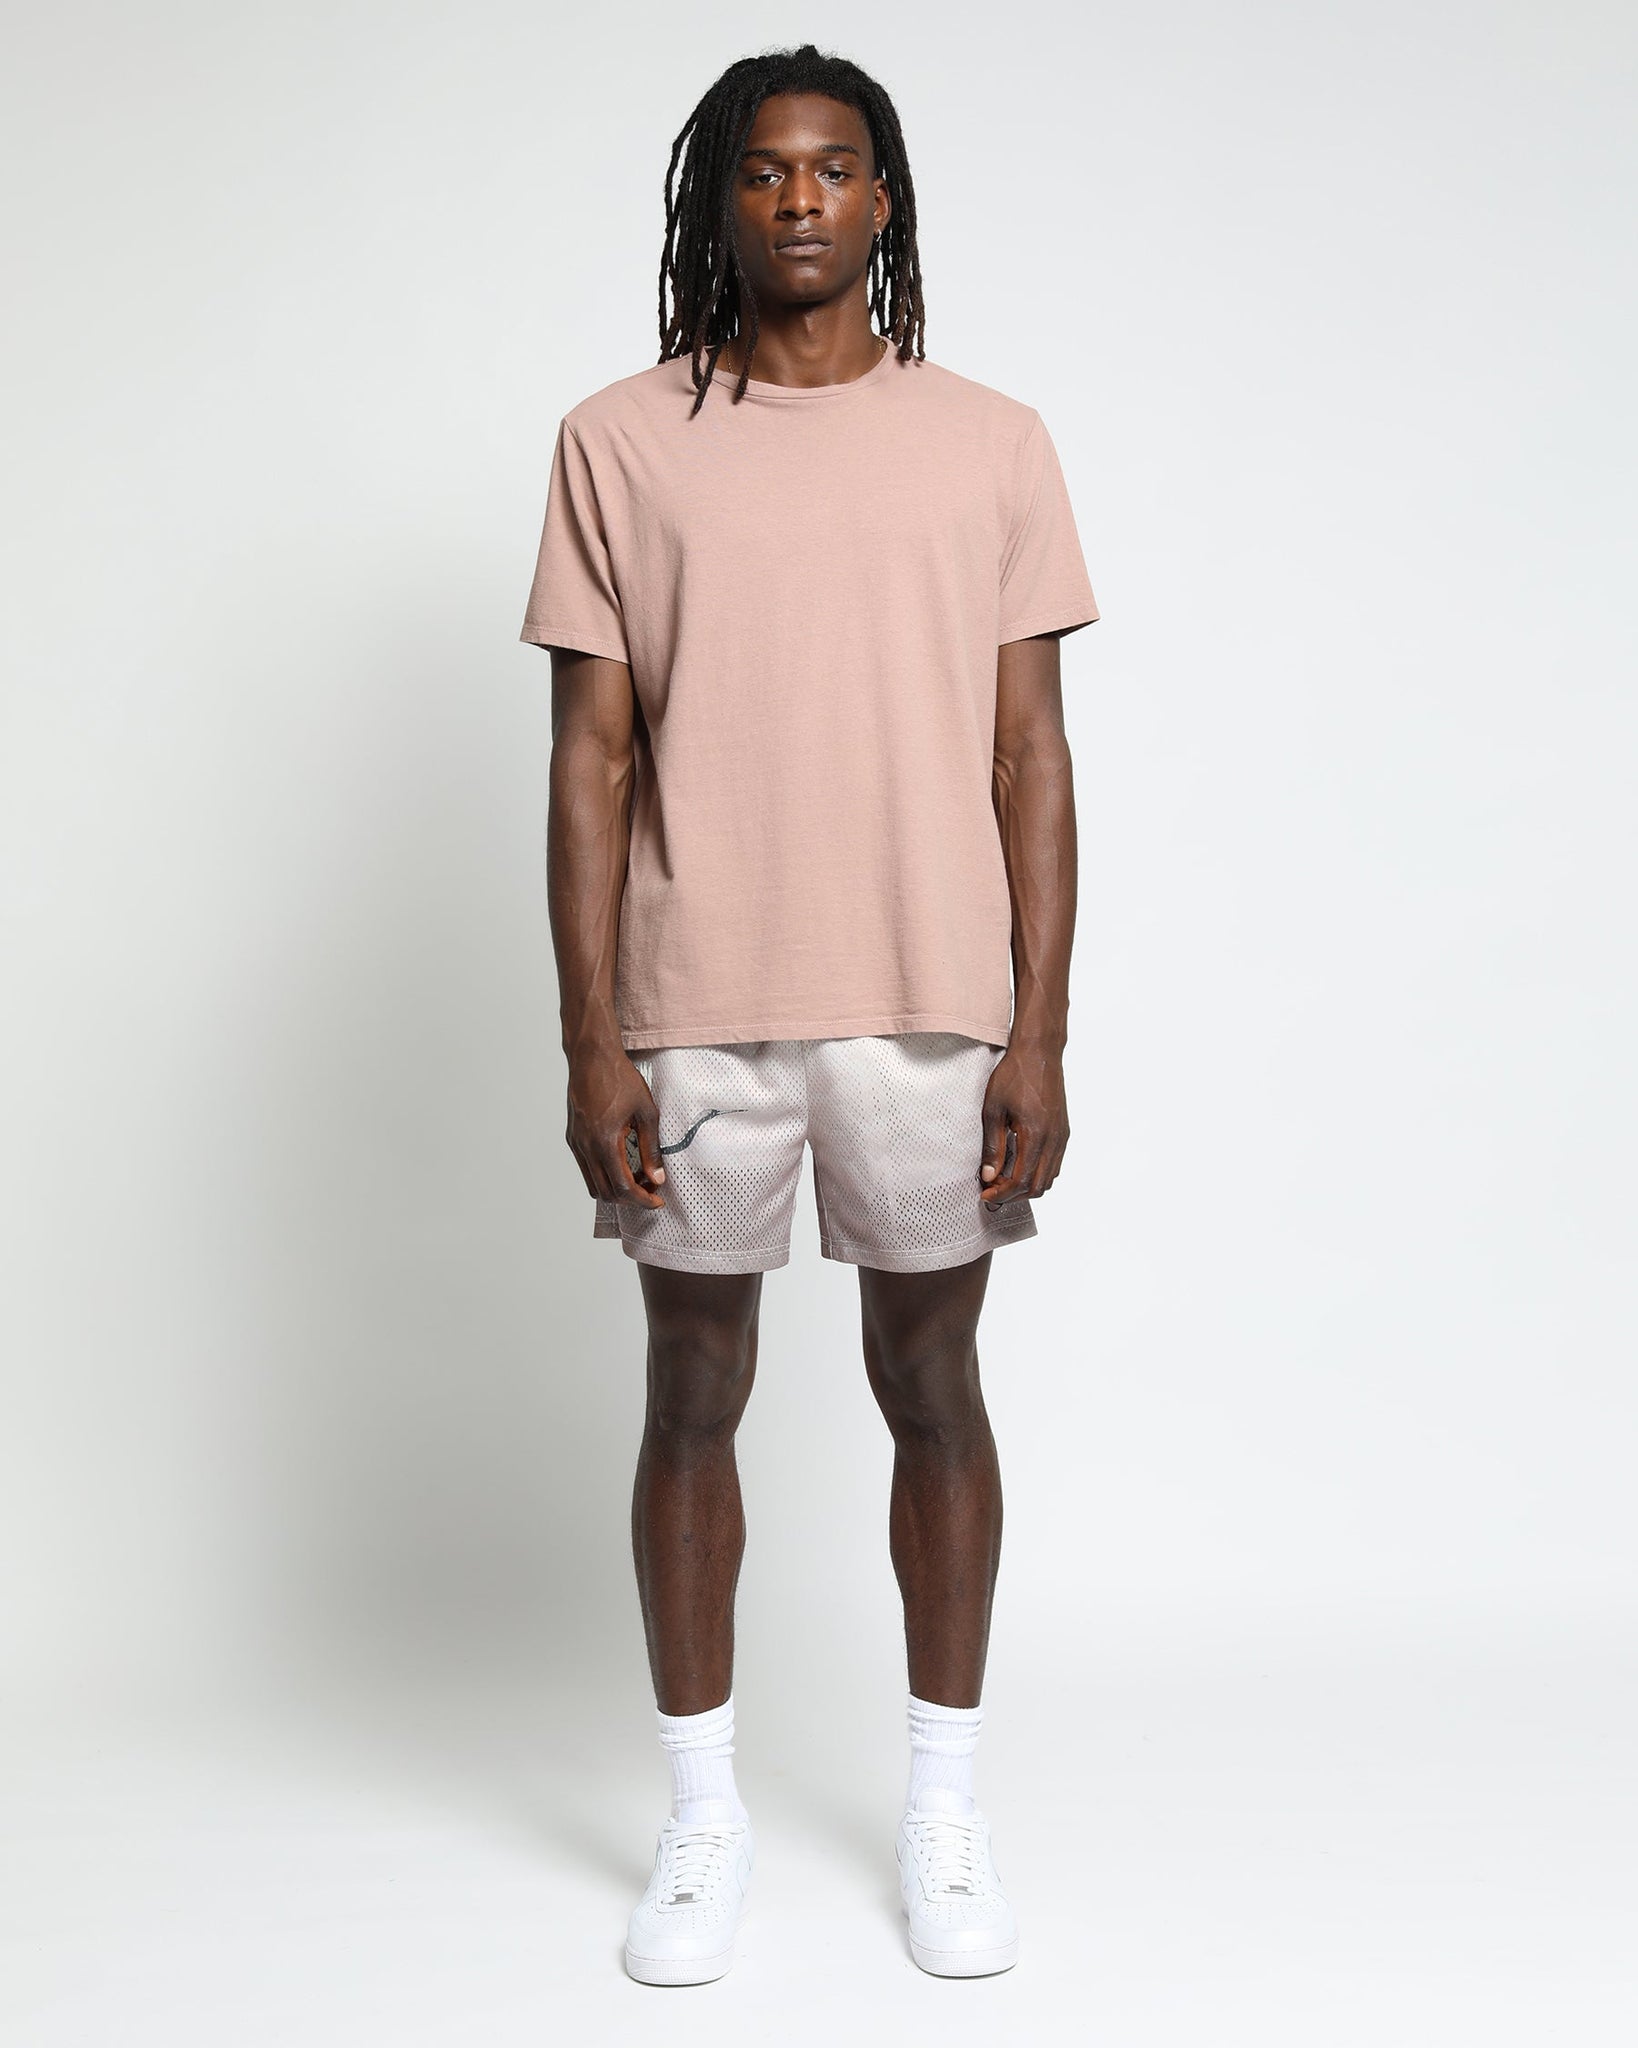 Shop Twenty Montreal Shirts, Shorts, & Pullovers